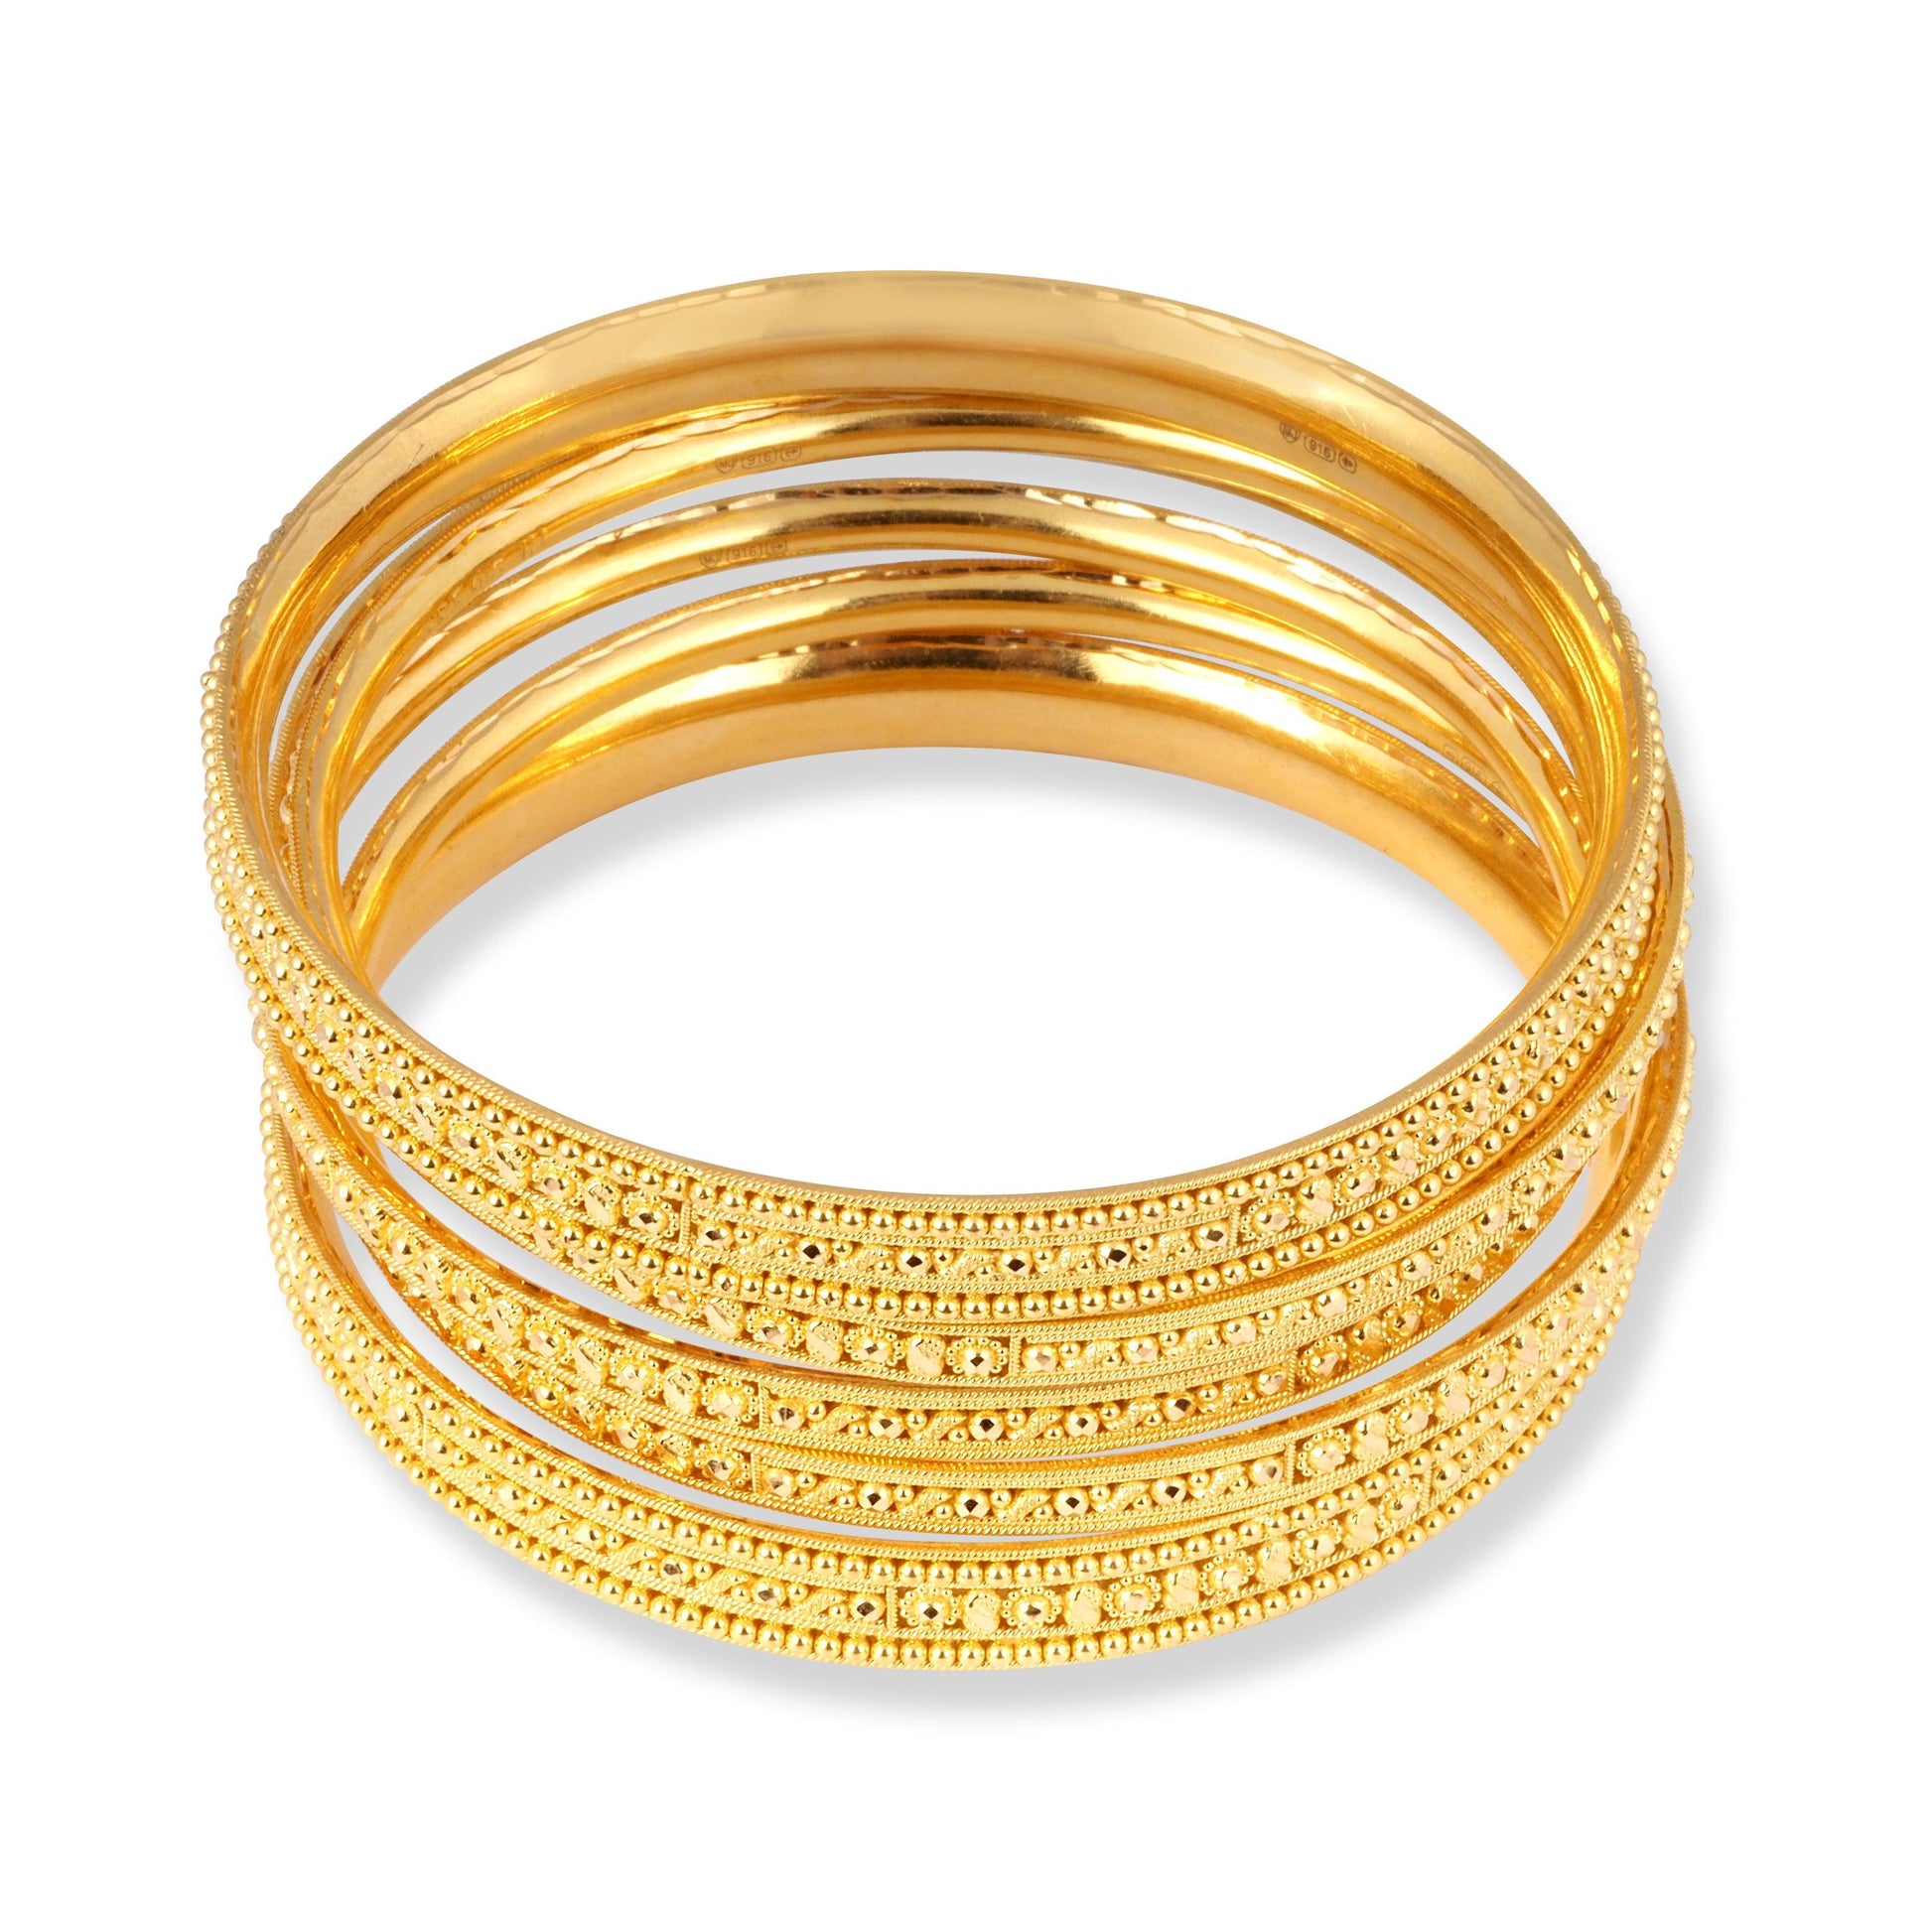 Set of Six 22ct Gold Bangles with Diamond Cut Beads & Flower Design B-8578 - Minar Jewellers